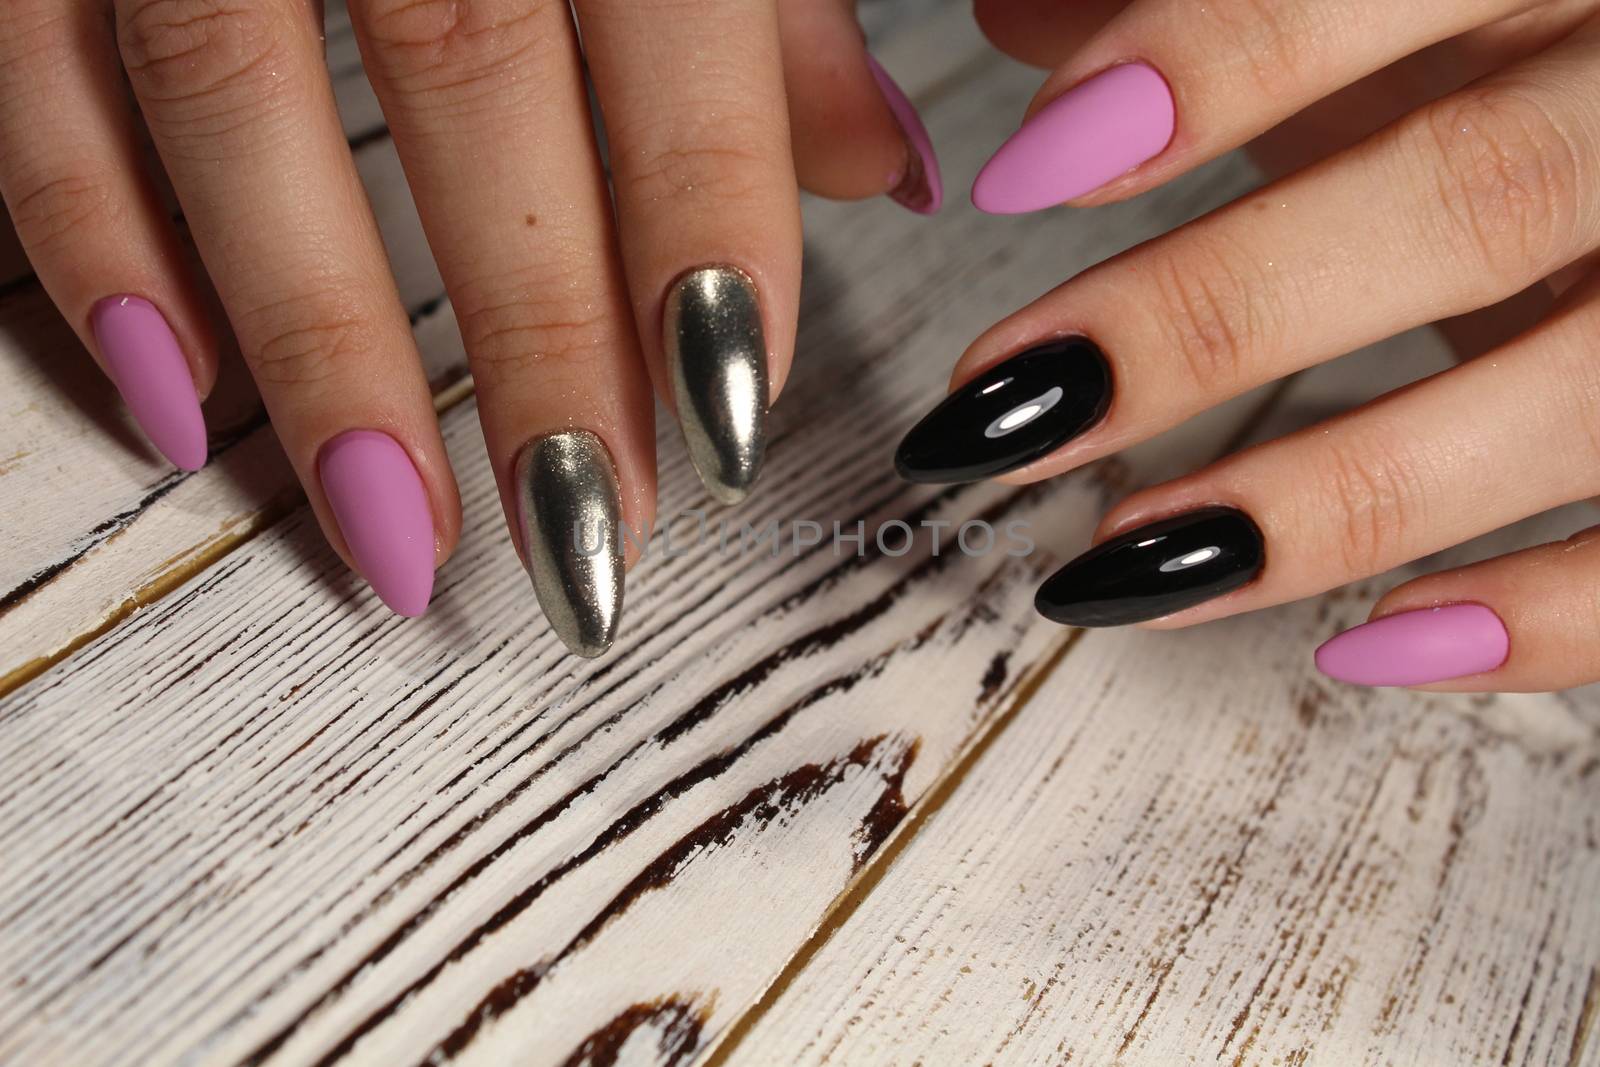 Manicured nails Nail Polish art design. Best 